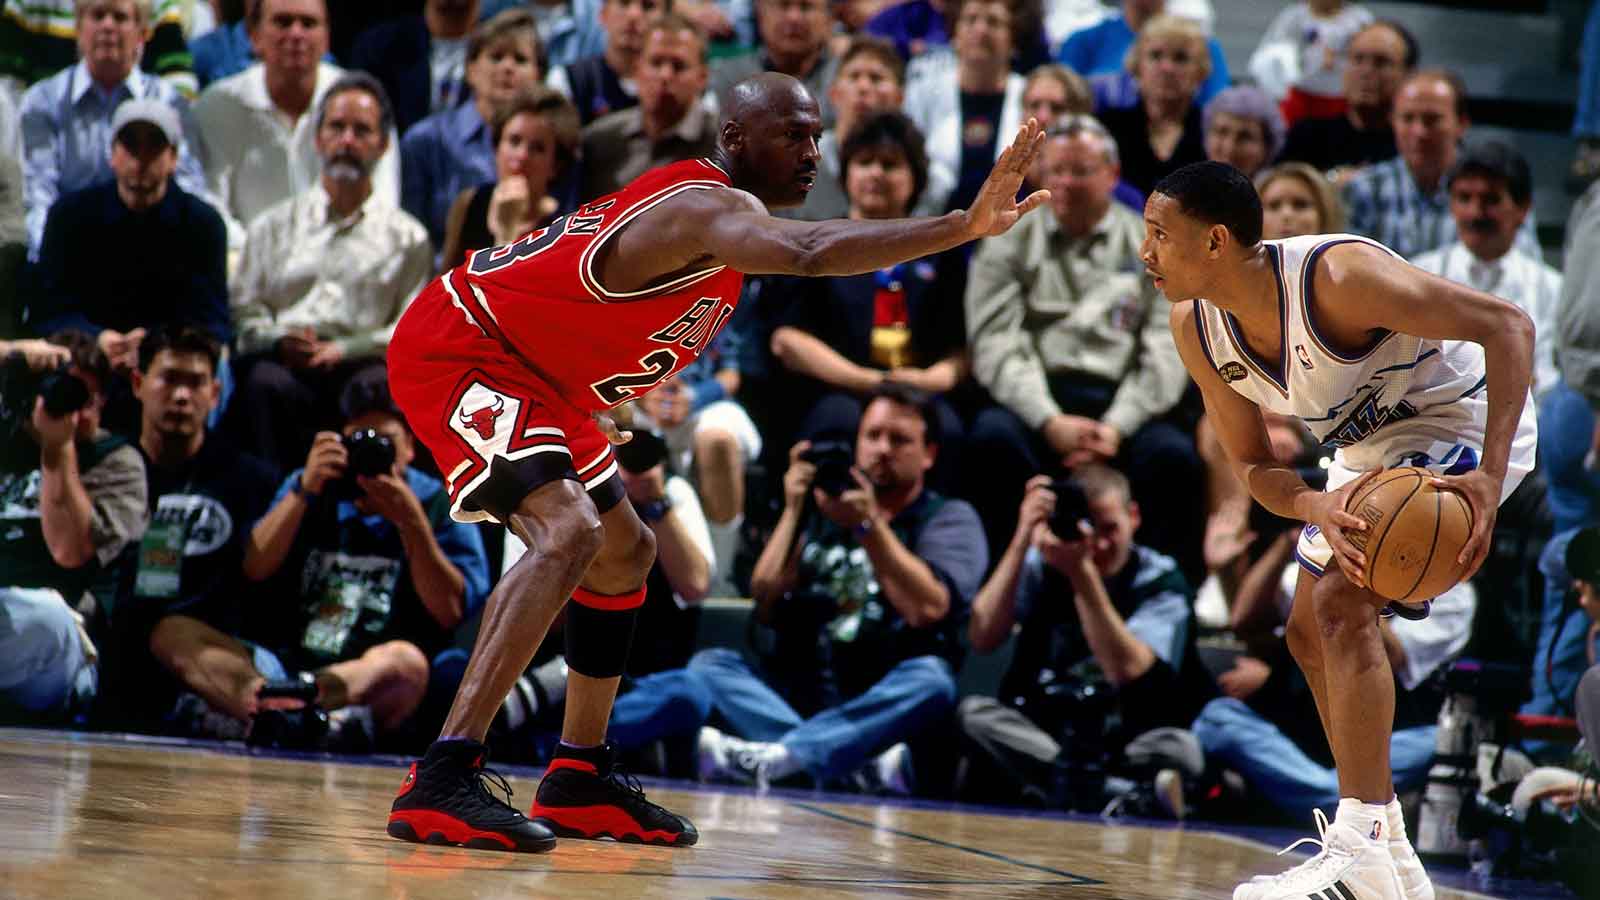 Michael Jordan 1998 NBA Finals 'The Last Dance' Game Worn Jersey